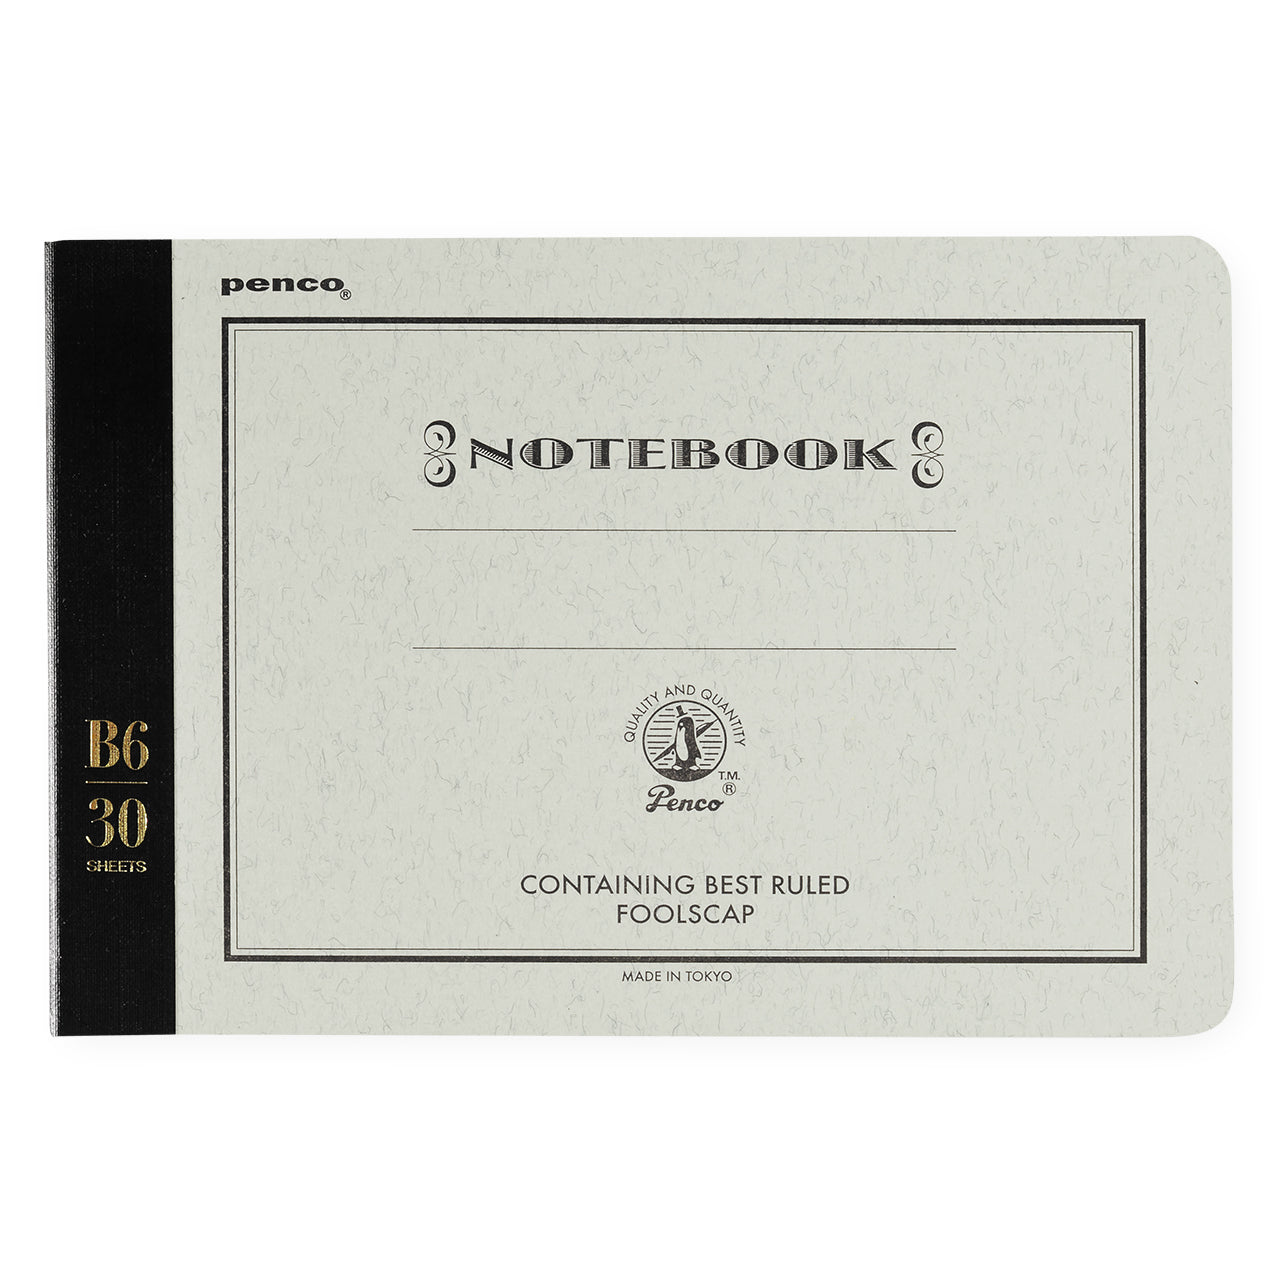 Hightide Penco Foolscap Notebook B6 | In four colors Black